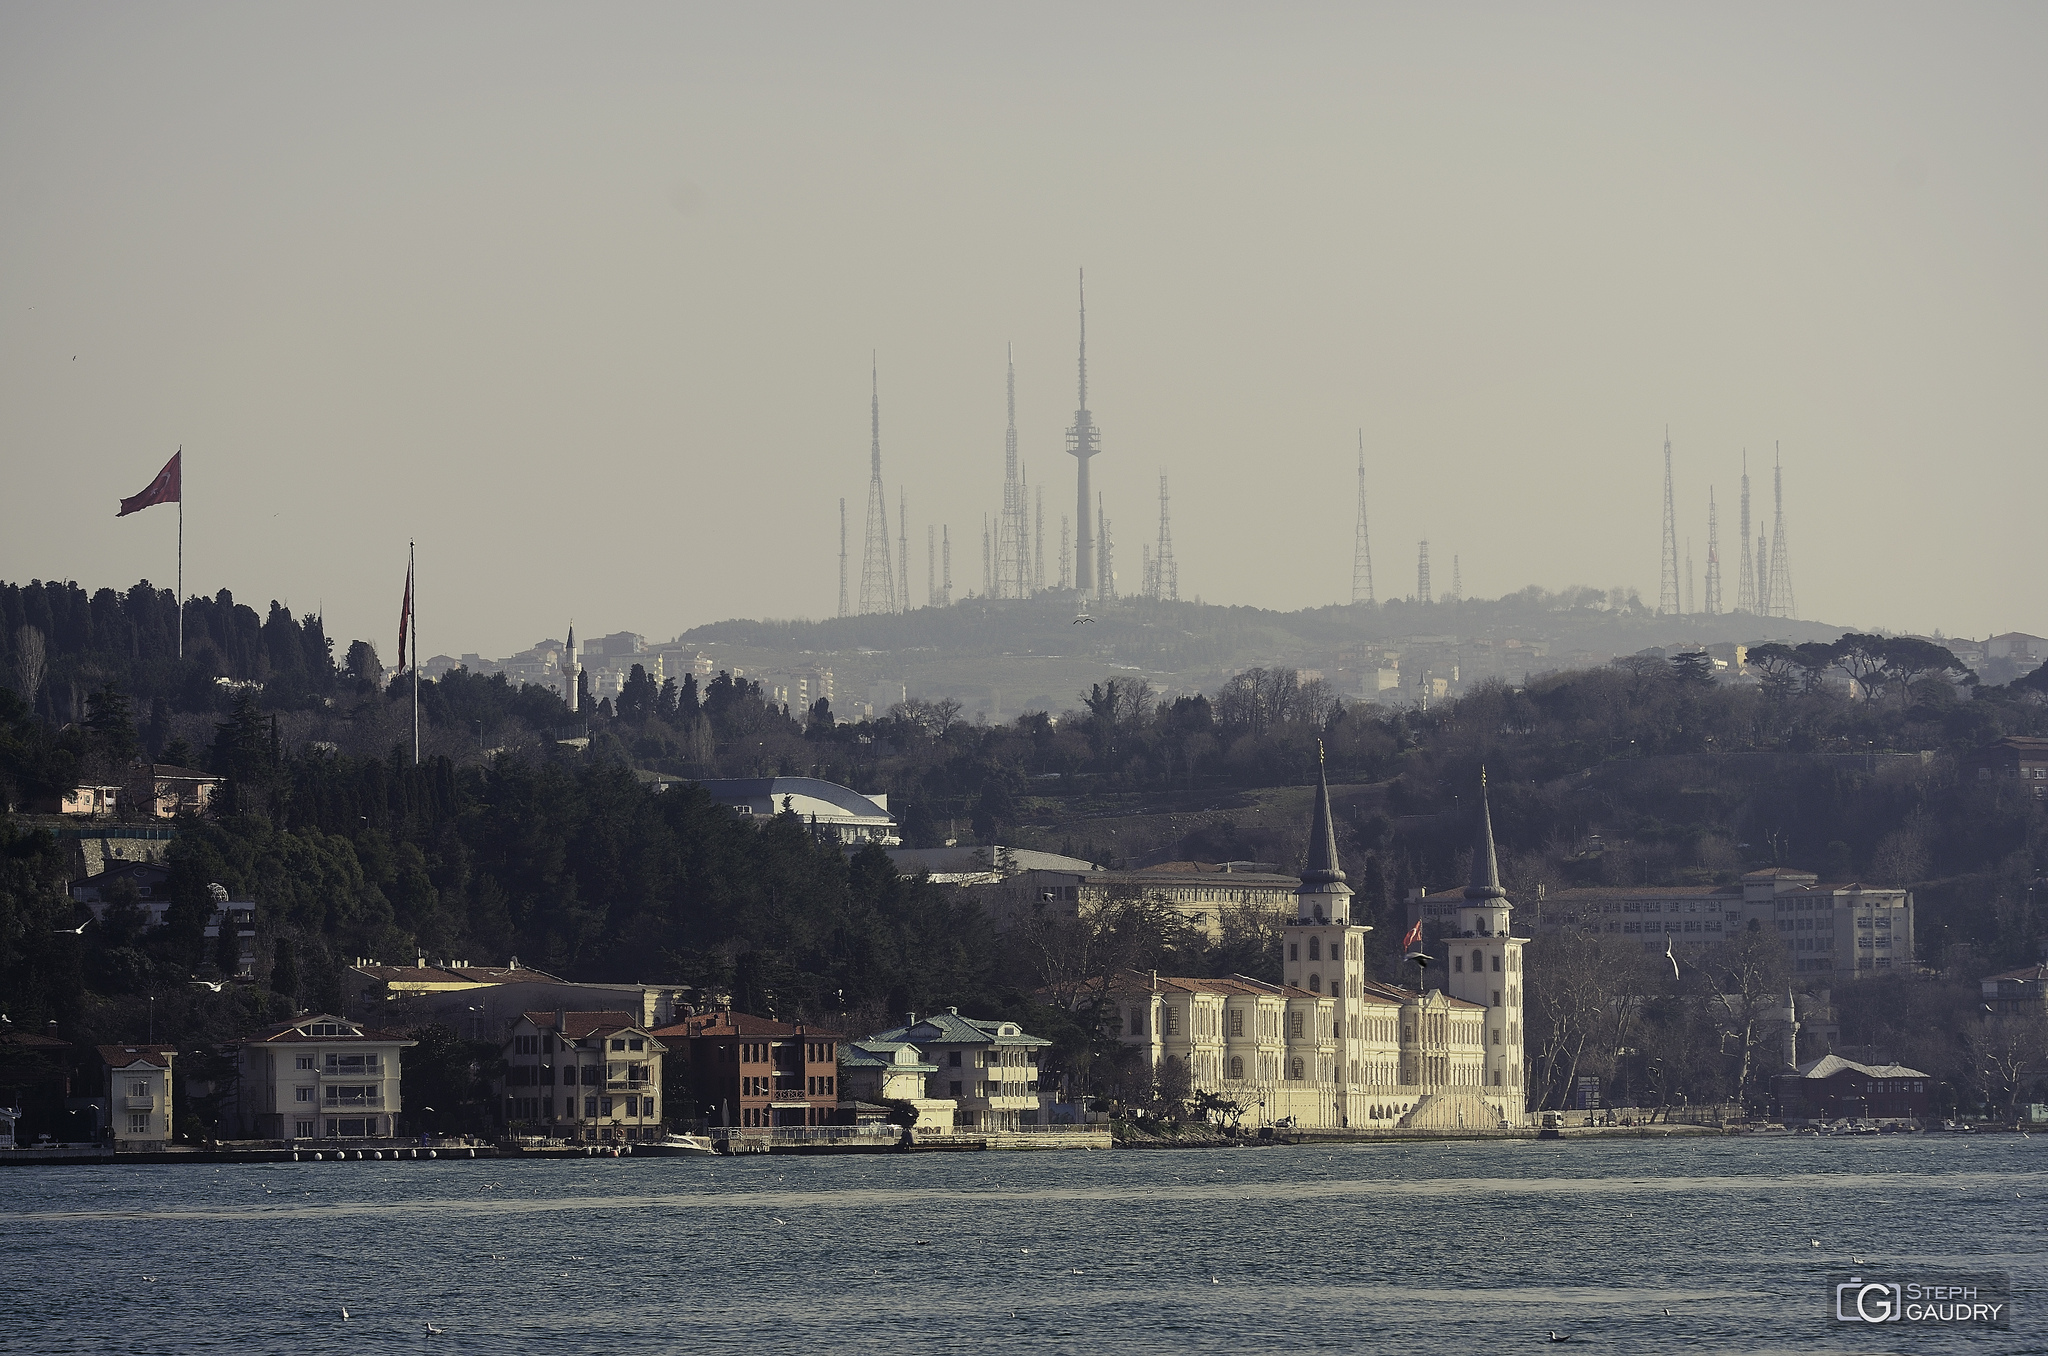 Bosphorus and forest of antennas [Klik om de diavoorstelling te starten]